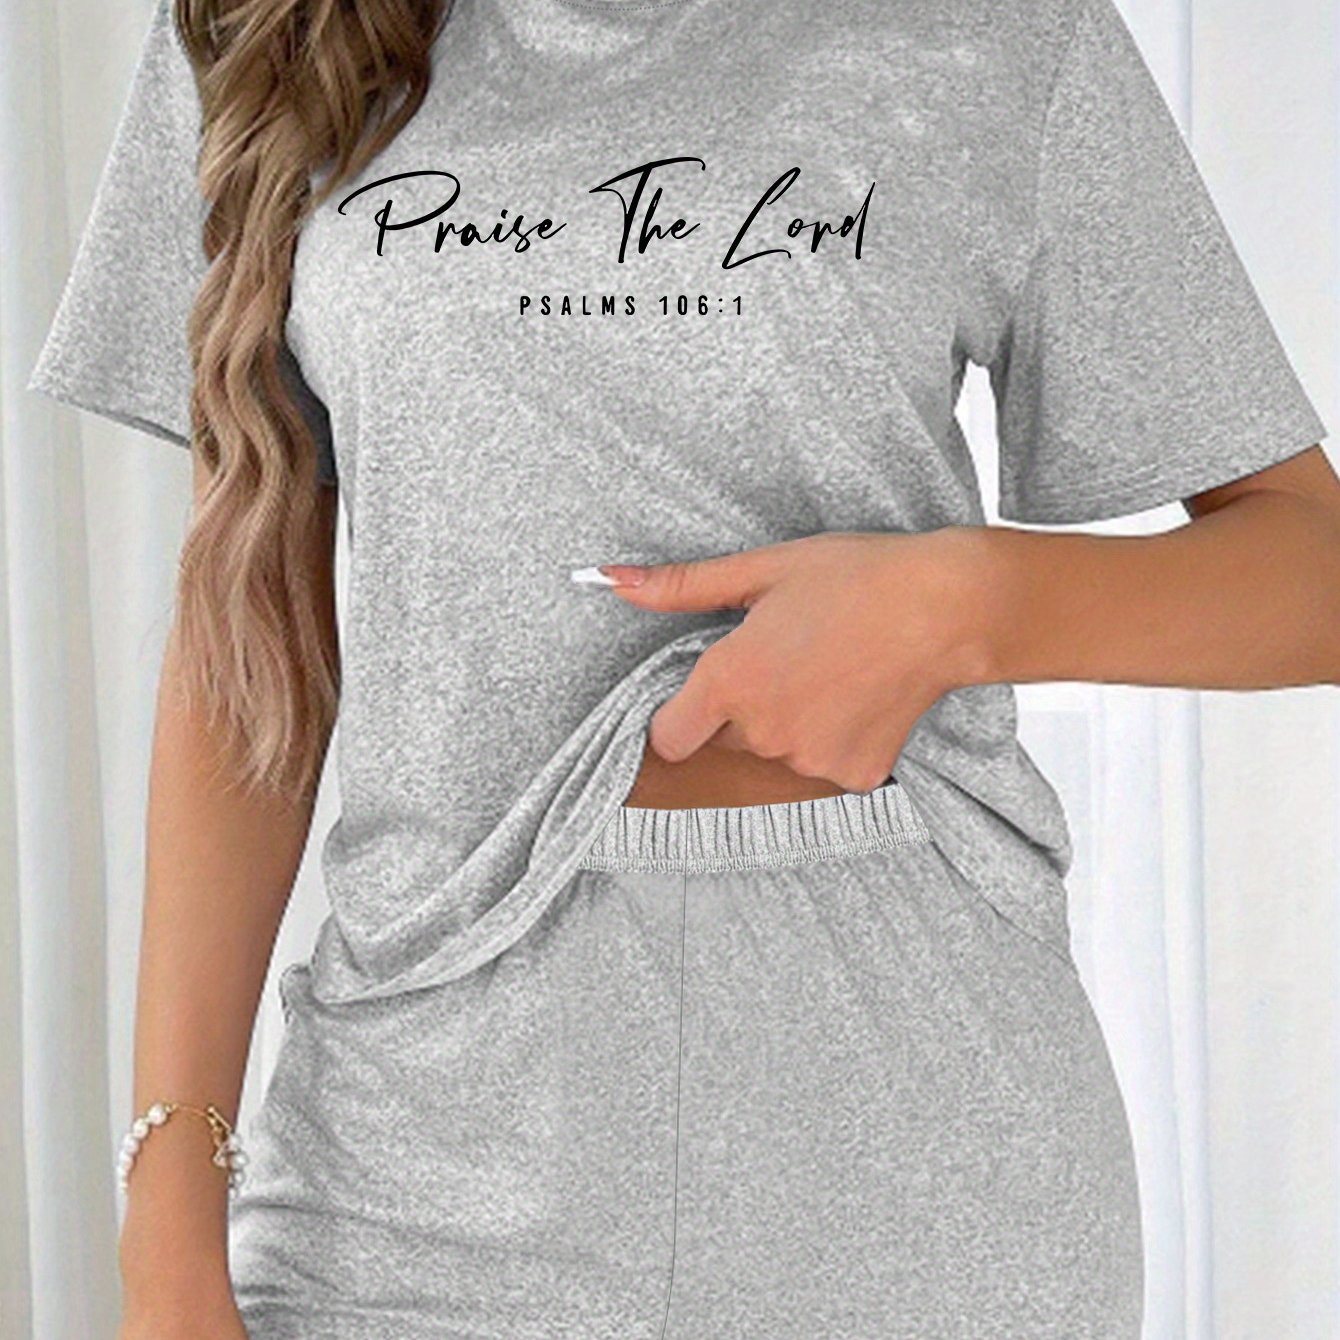 Praise The Lord Women's Christian Short Pajama Set claimedbygoddesigns